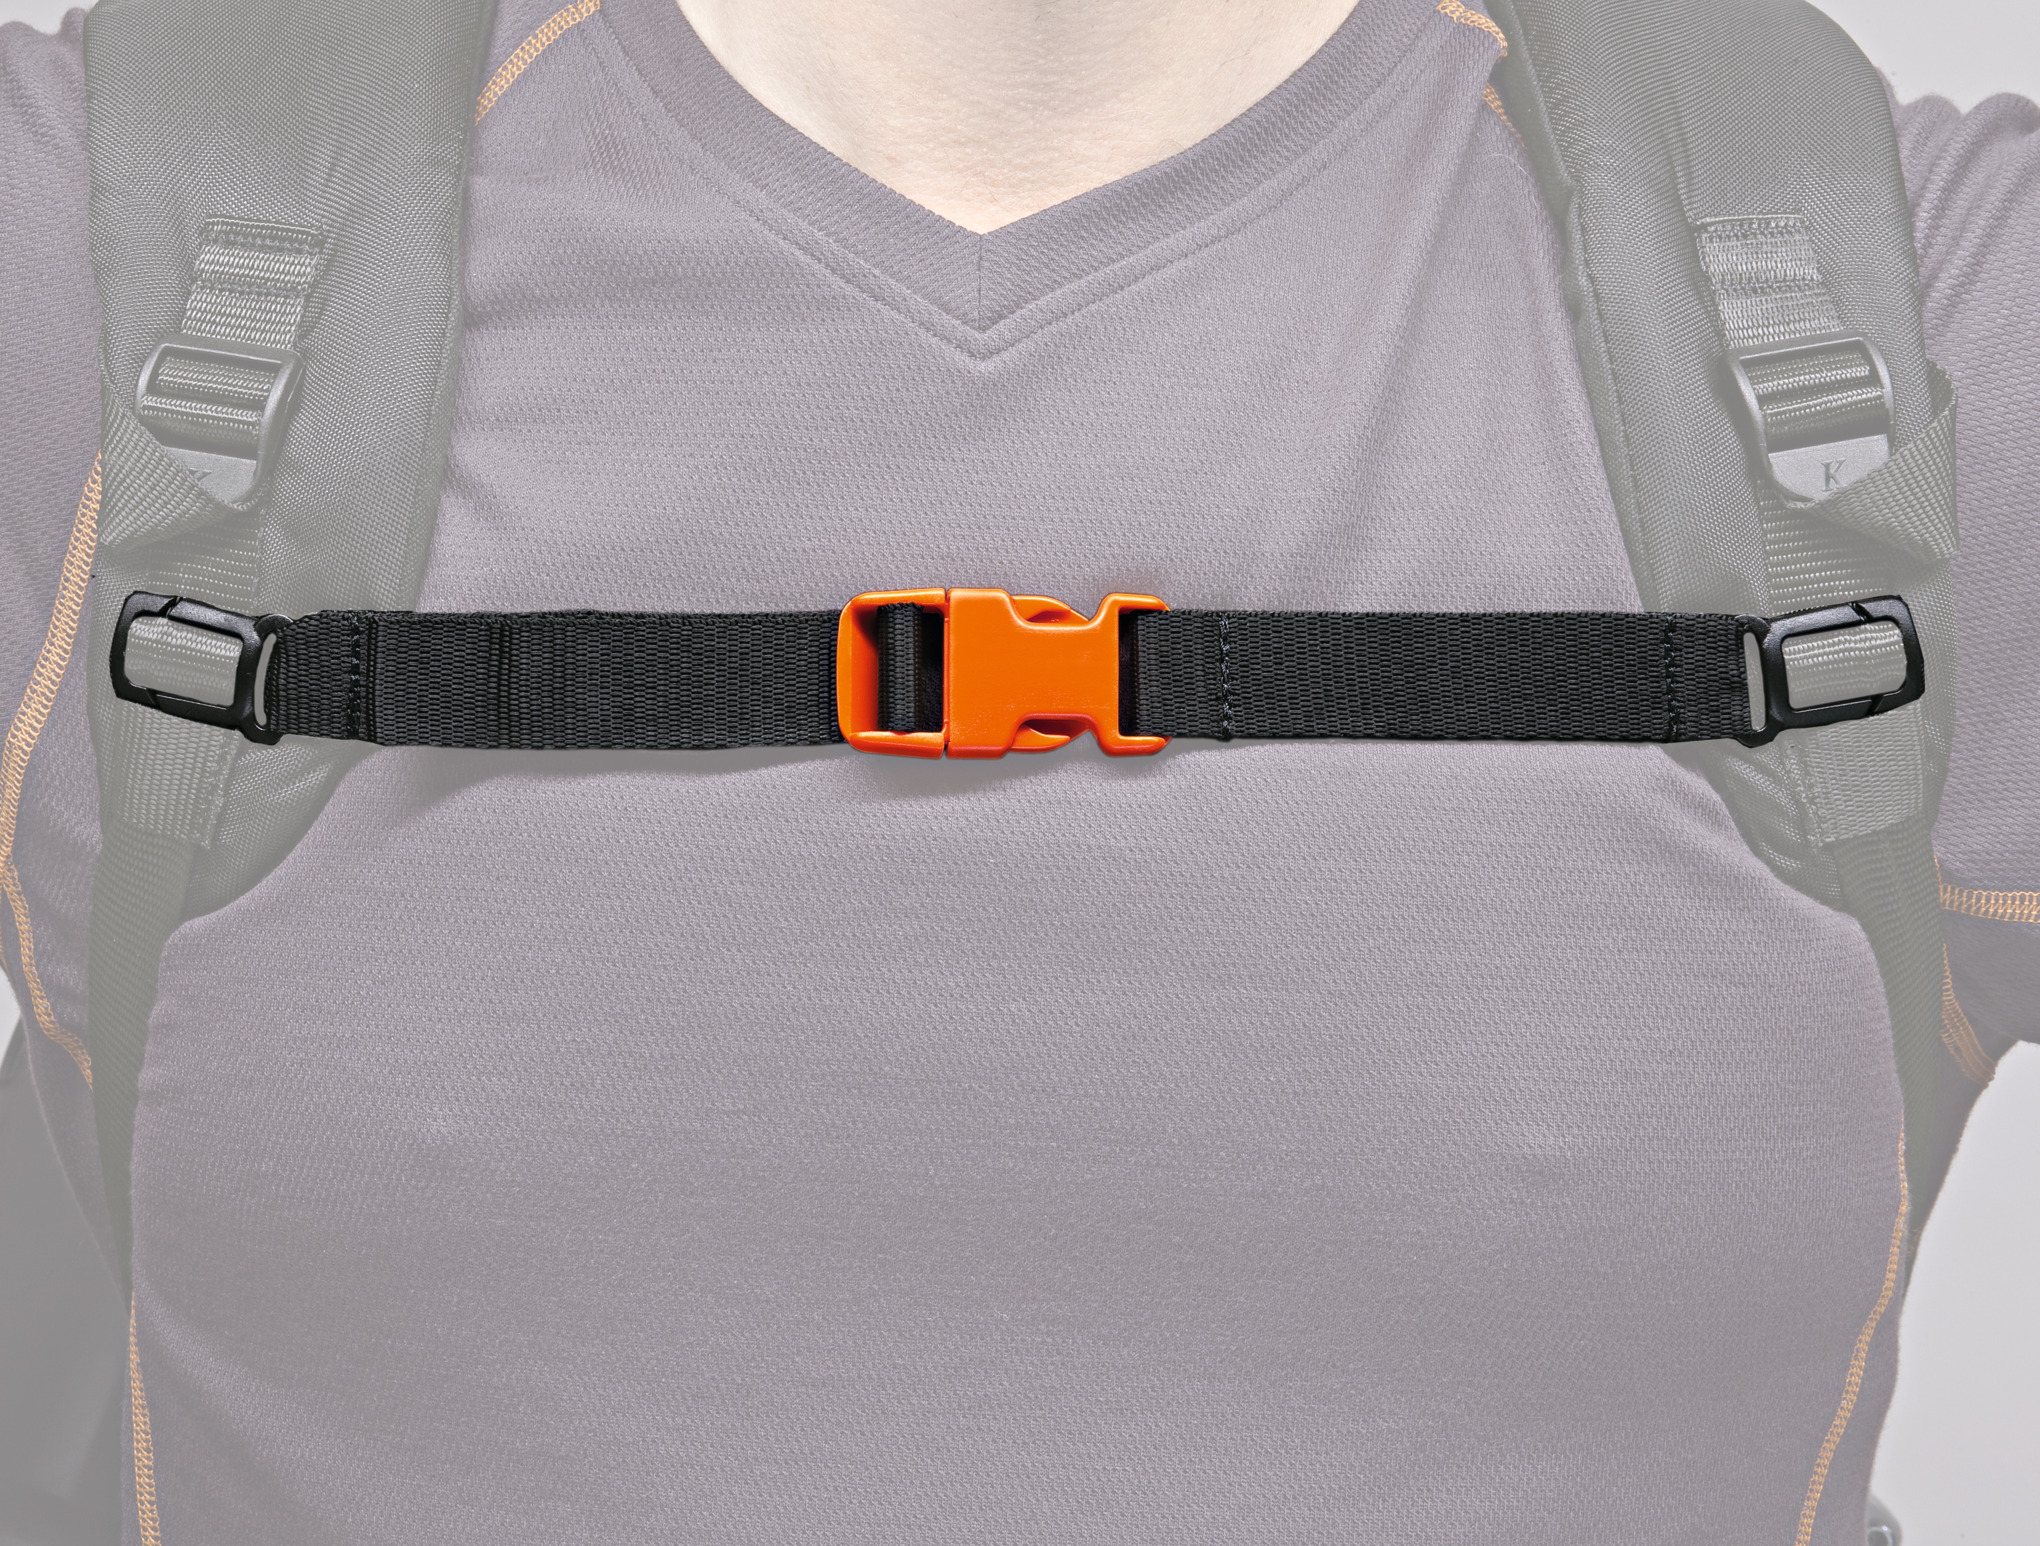 Chest belt for ADVANCE universal harness